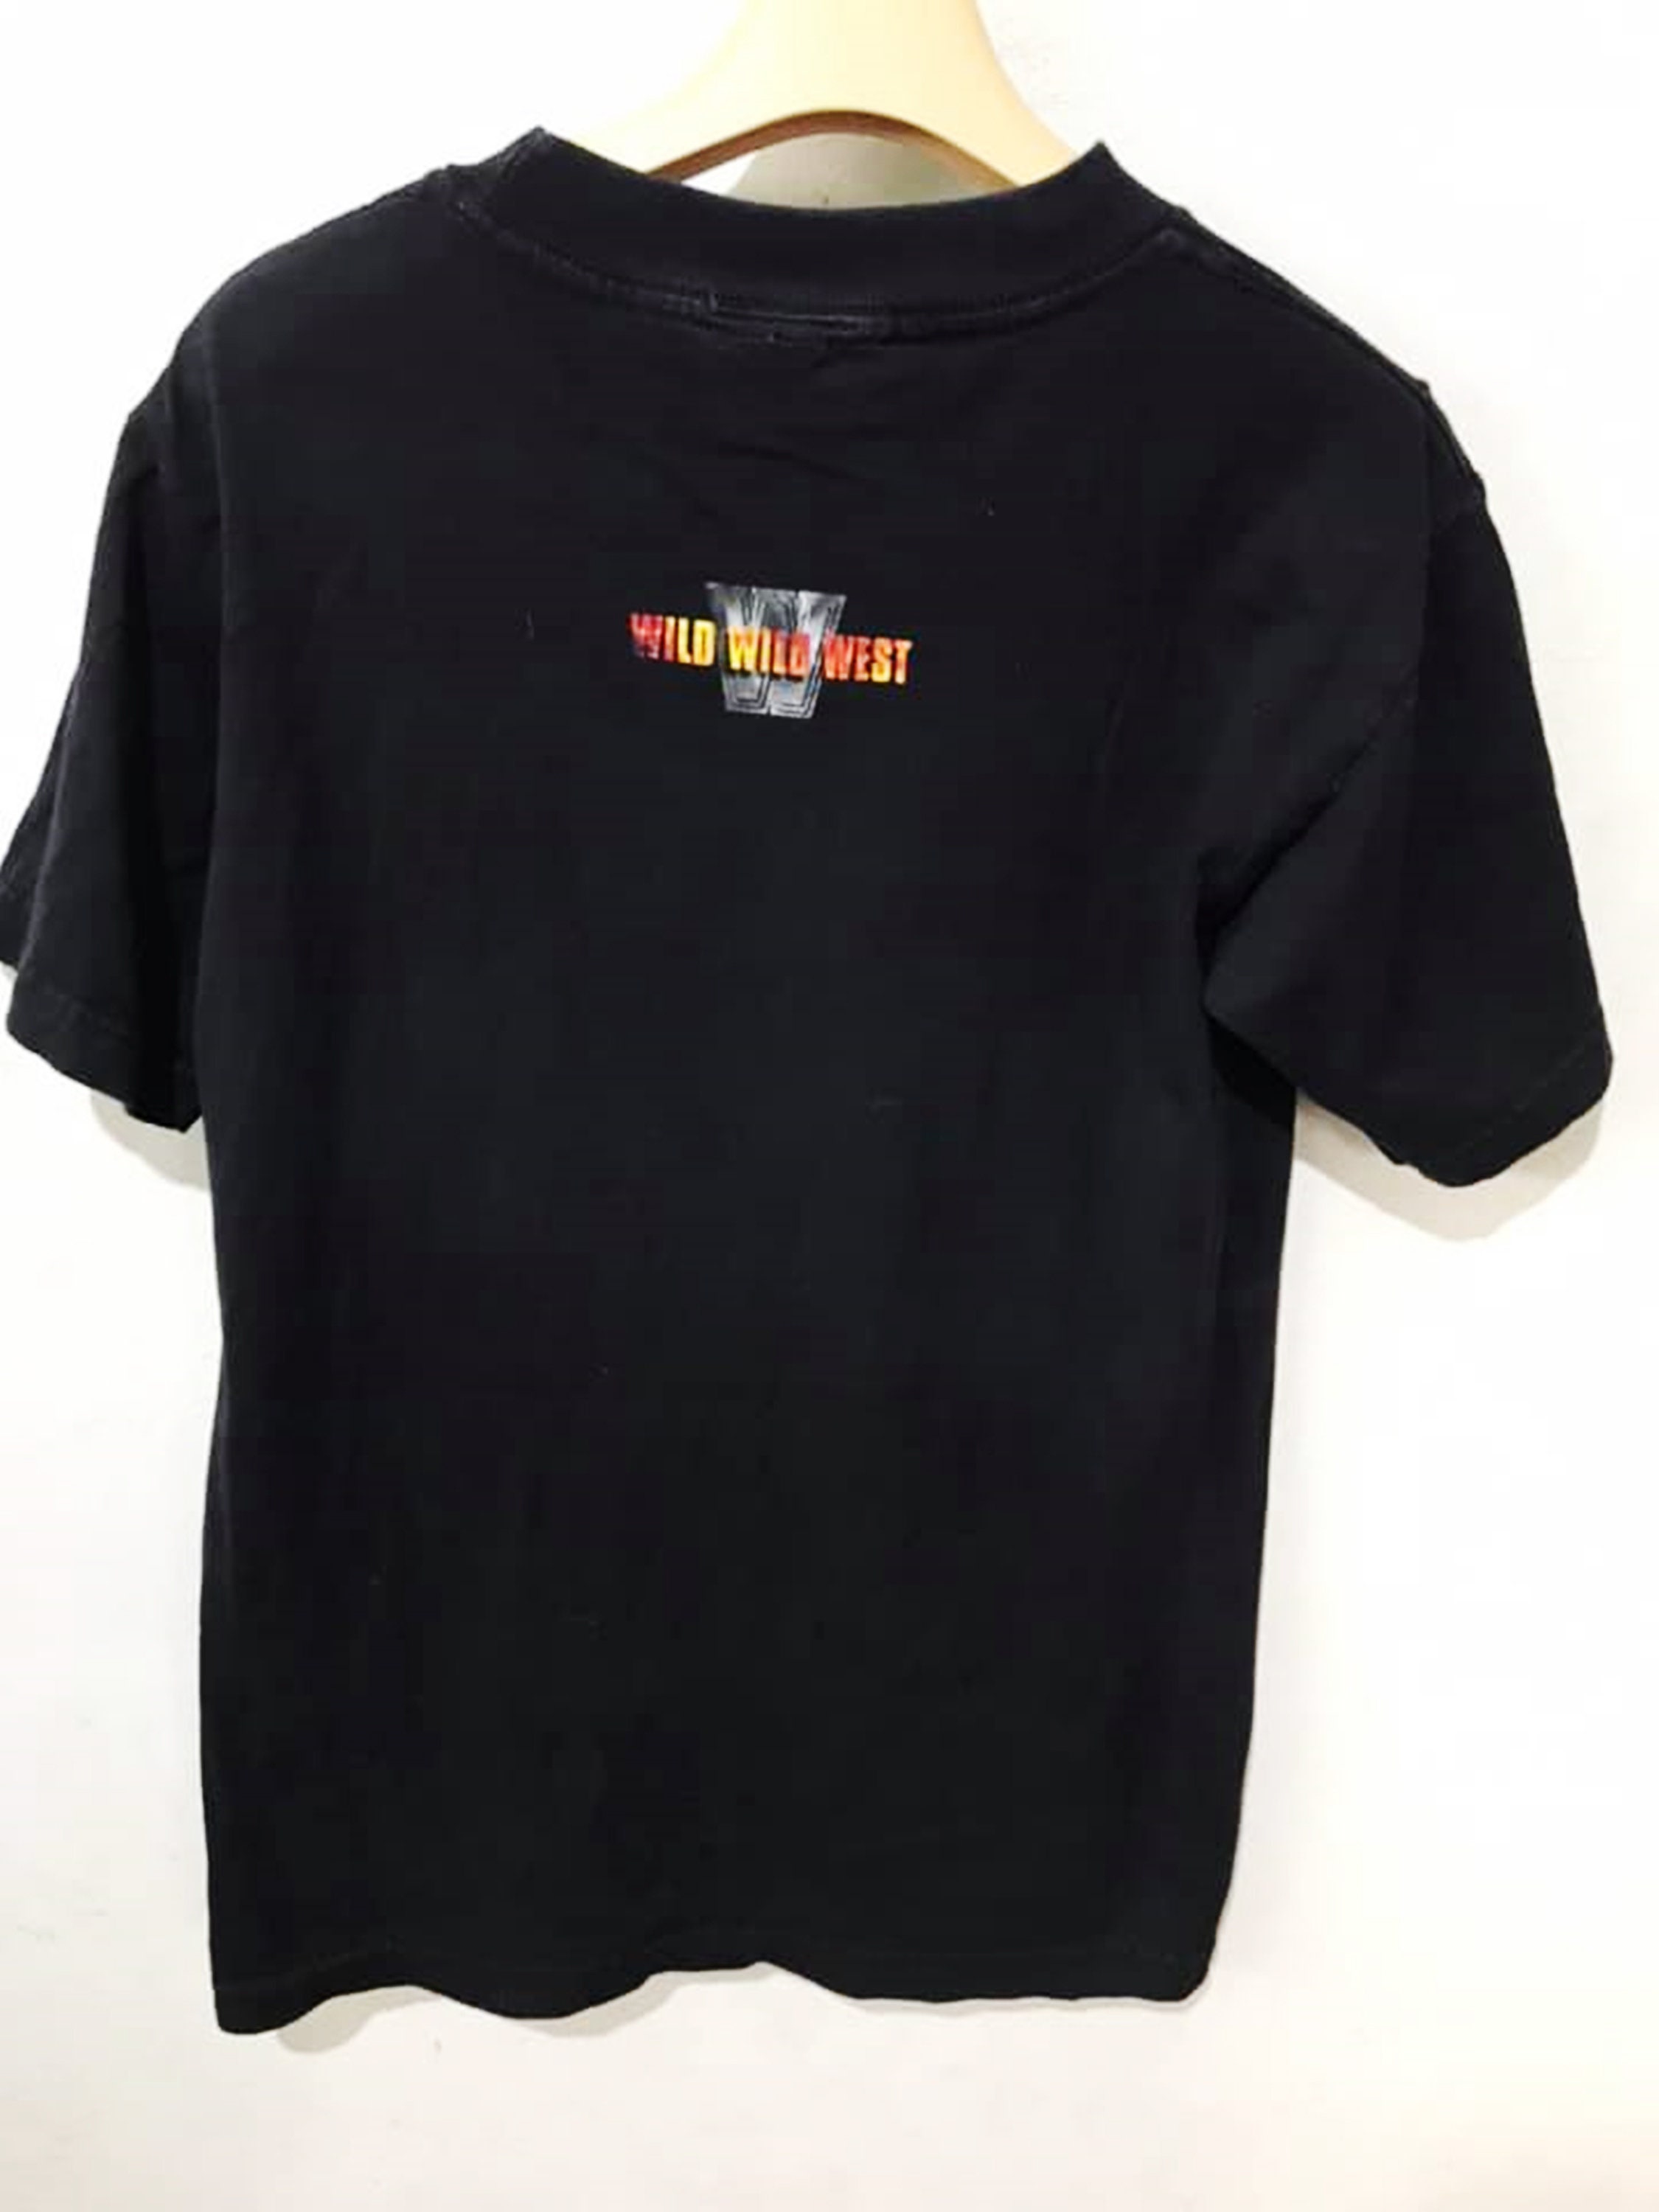 Vintage 1999 Wild Wild West Shirt Size S Free Shipping | Etsy